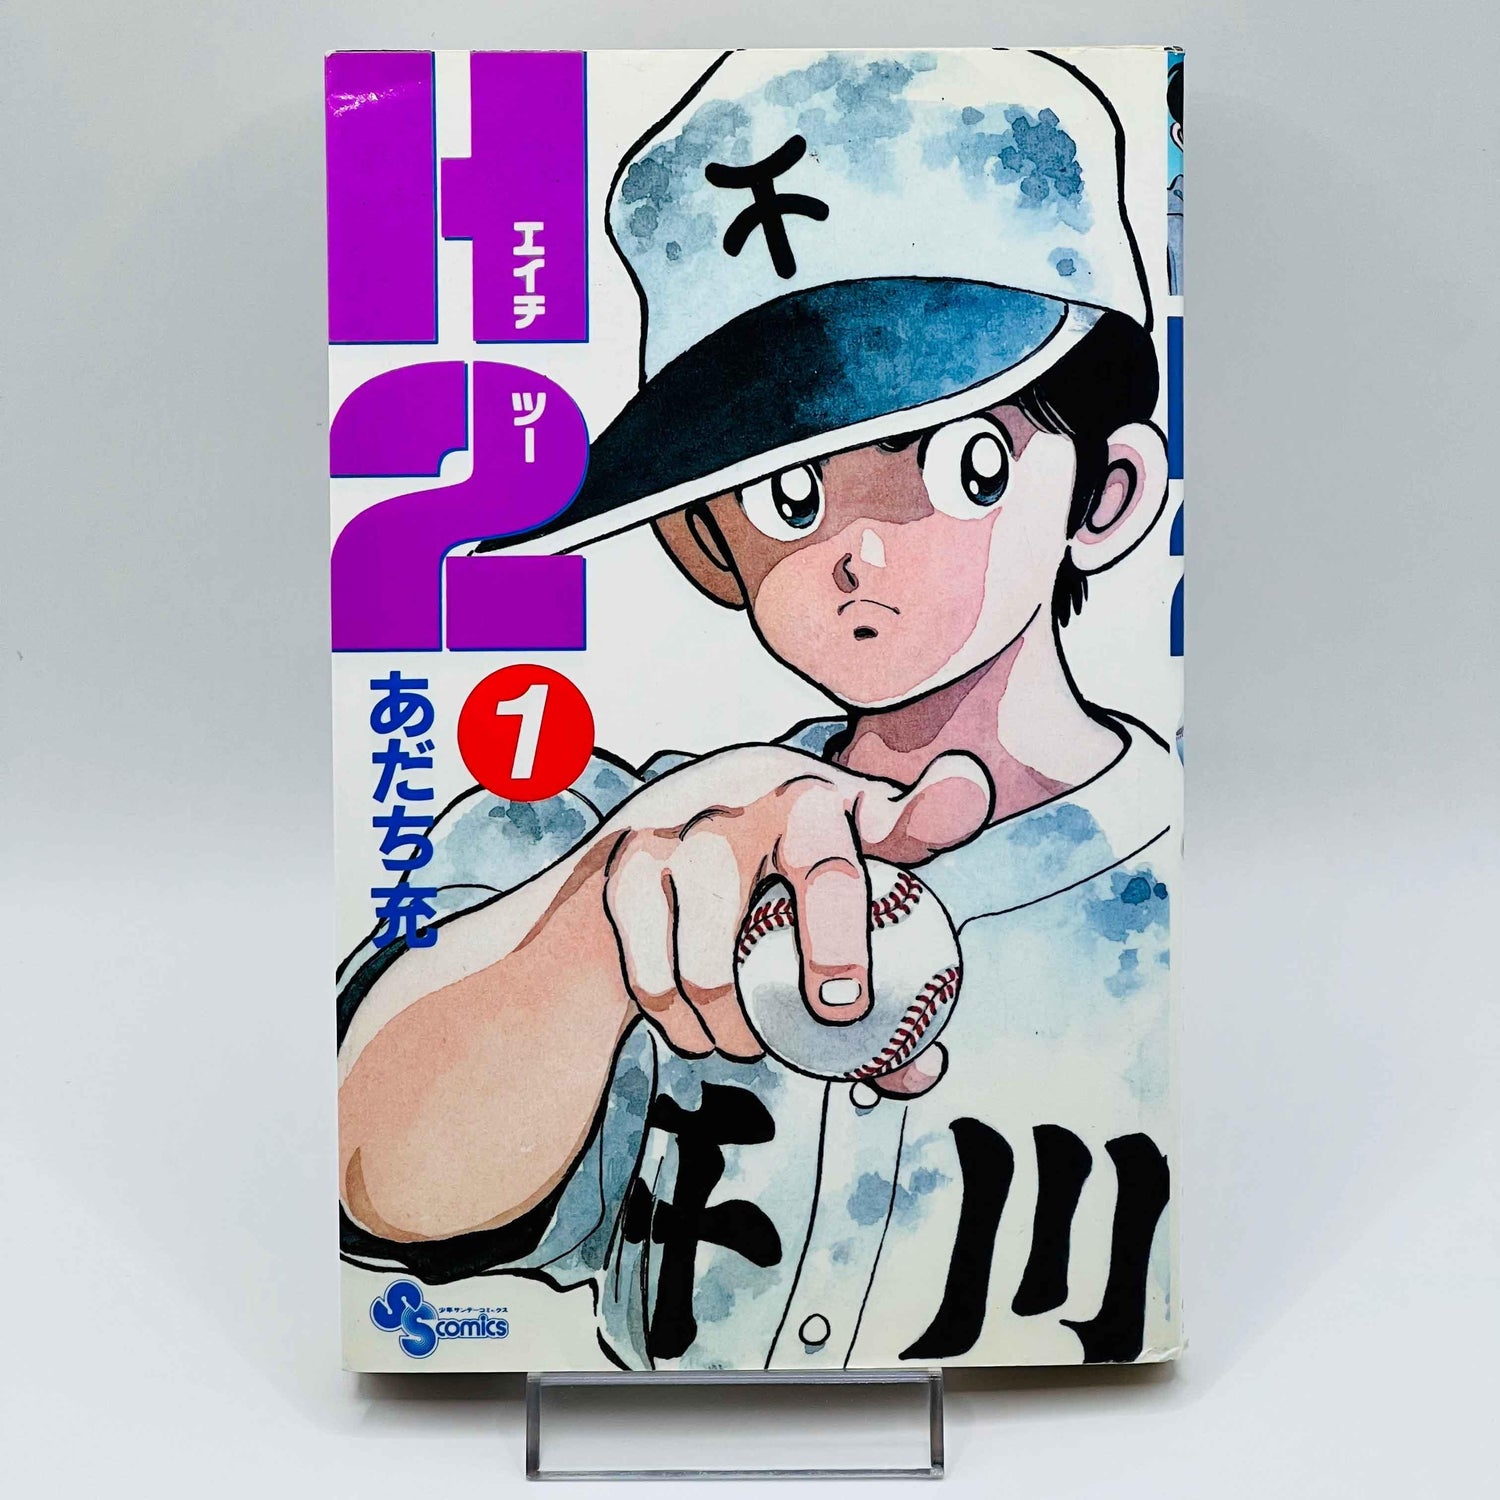 H2 (Adachi) - Volume 01 - 1stPrint.net - 1st First Print Edition Manga Store - M-H2-01-001